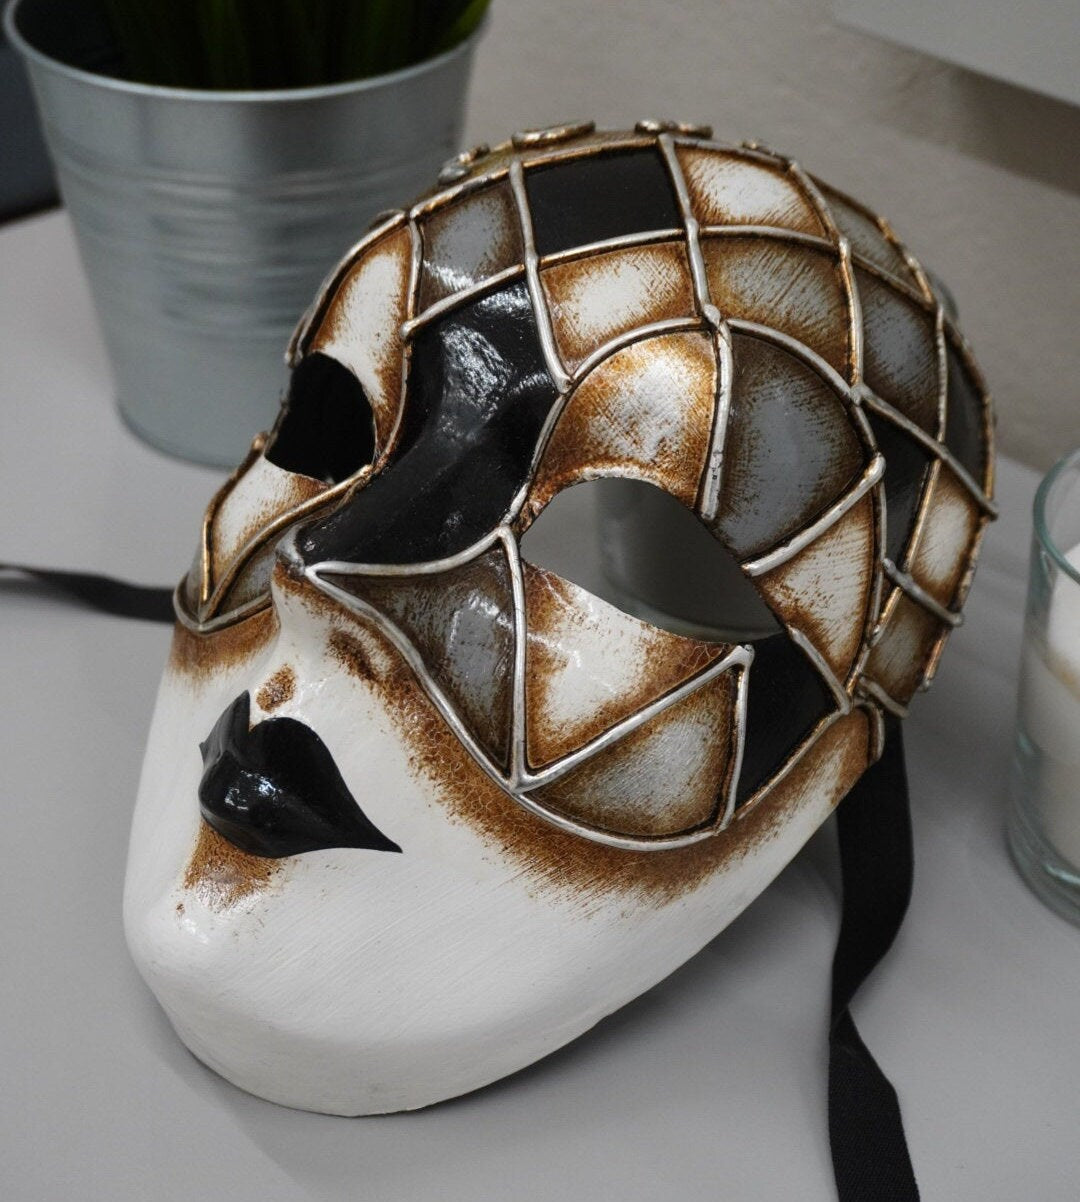 Máscara lista - Darwin Full Face Máscara veneciana italiana Máscara de Venecia, Cara de Arlequín